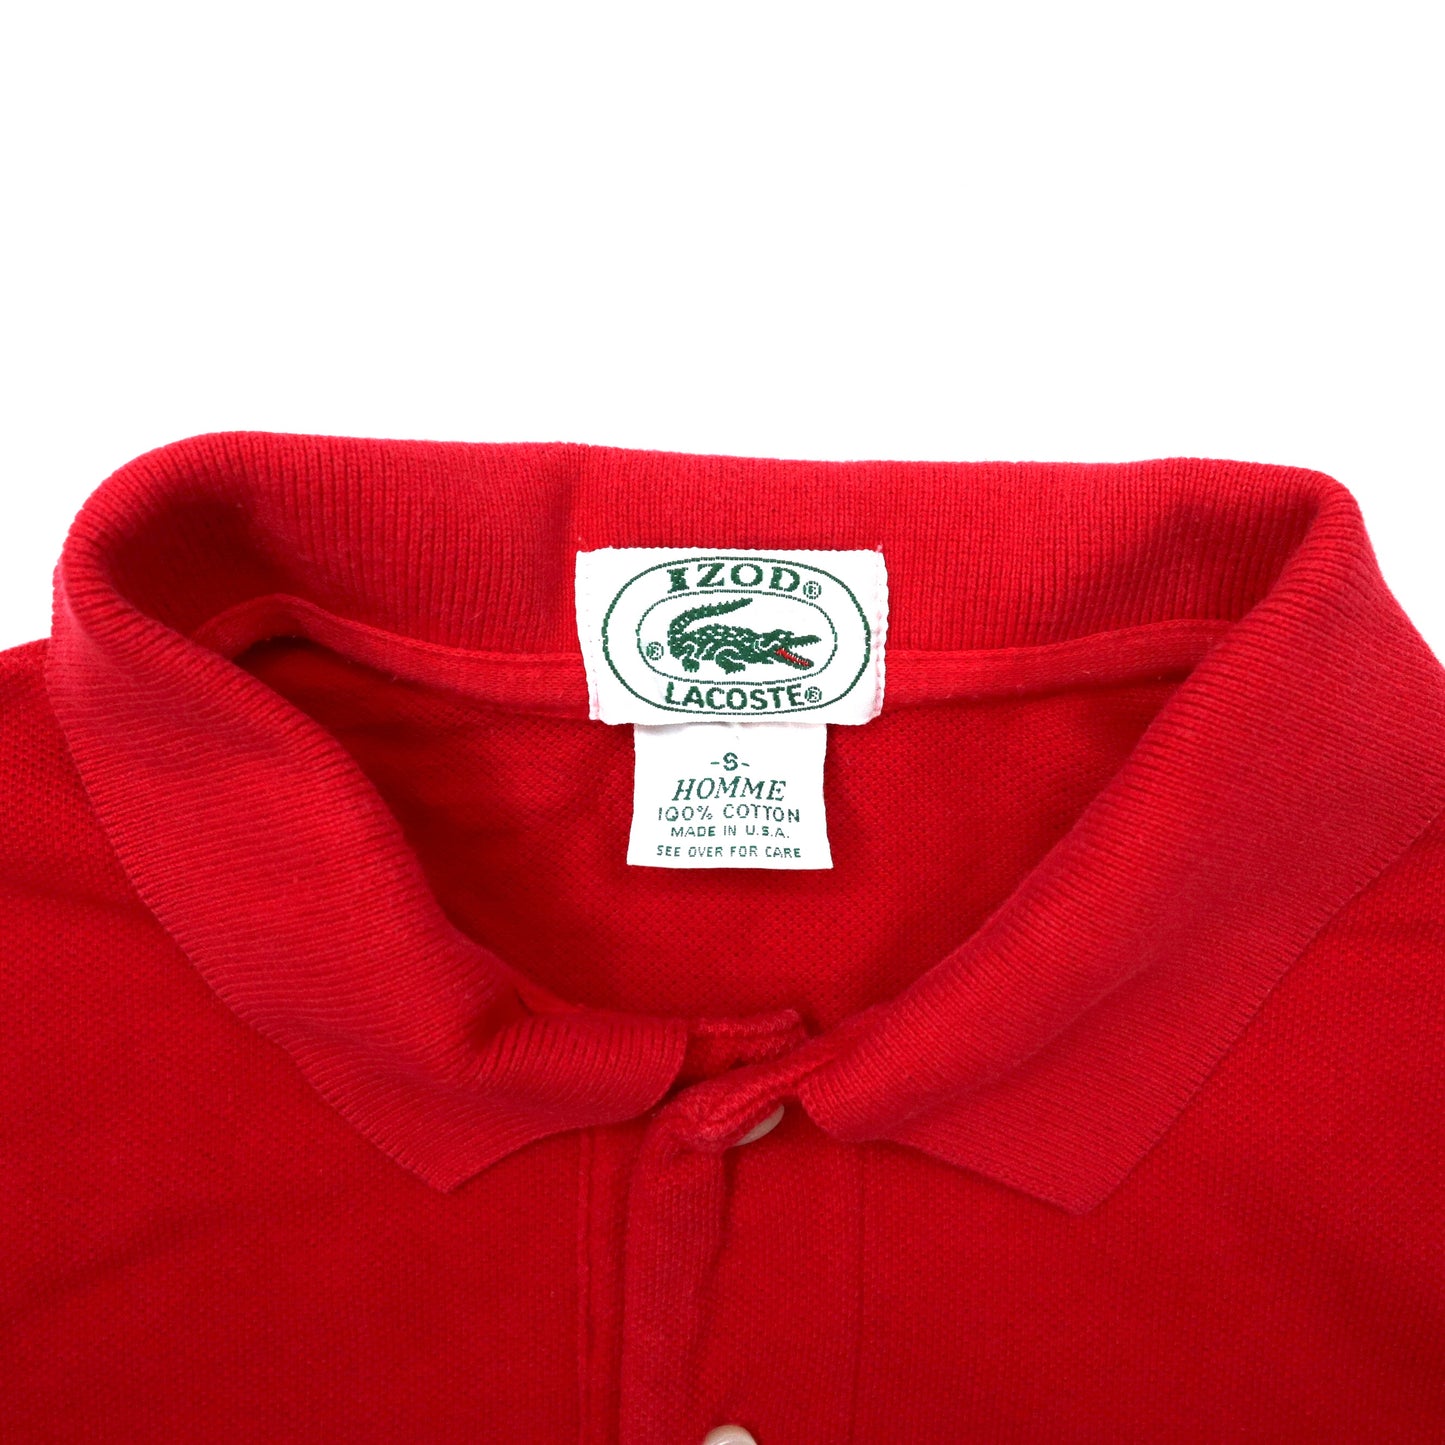 USA製 IZOD LACOSTE ポロシャツ S レッド コットン ワンポイントロゴ 80年代